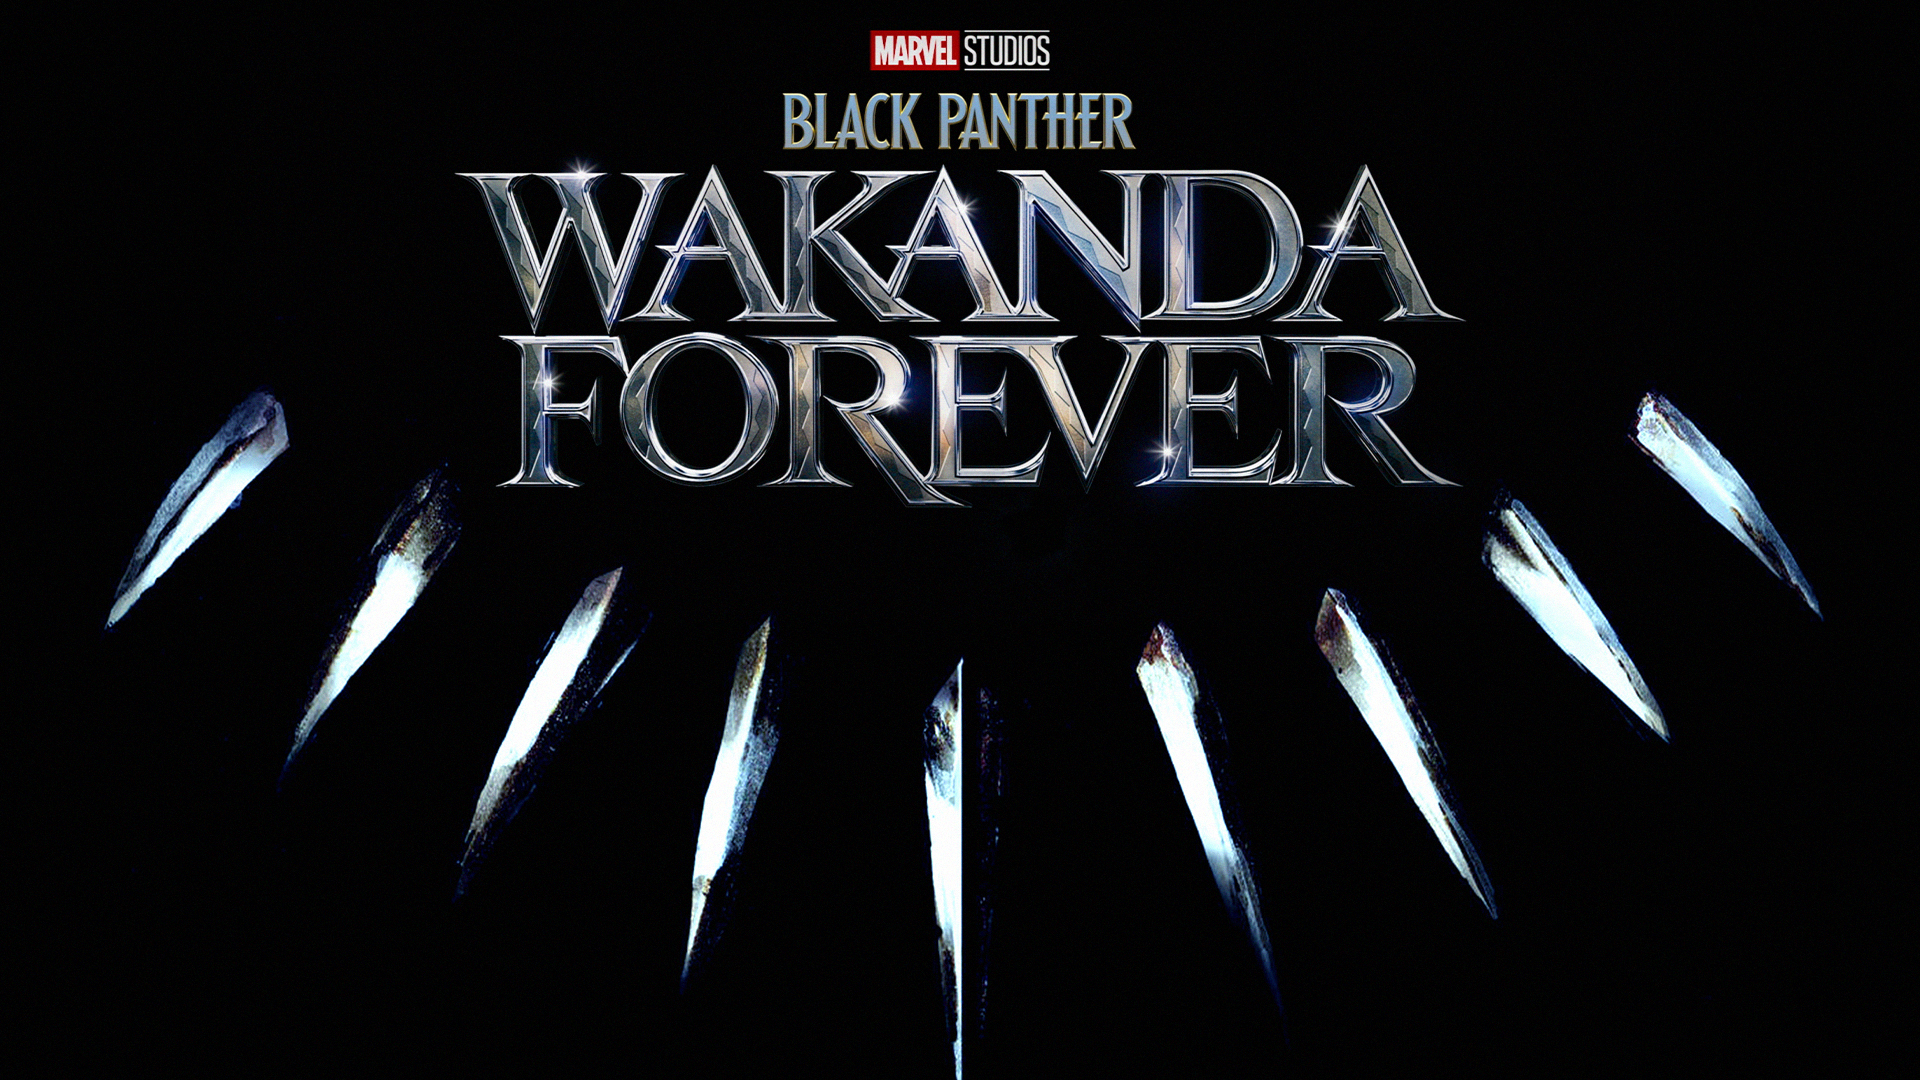 What I Heard: Letitia Wright and 'Black Panther: Wakanda Forever' Rumors. The Cosmic Circus